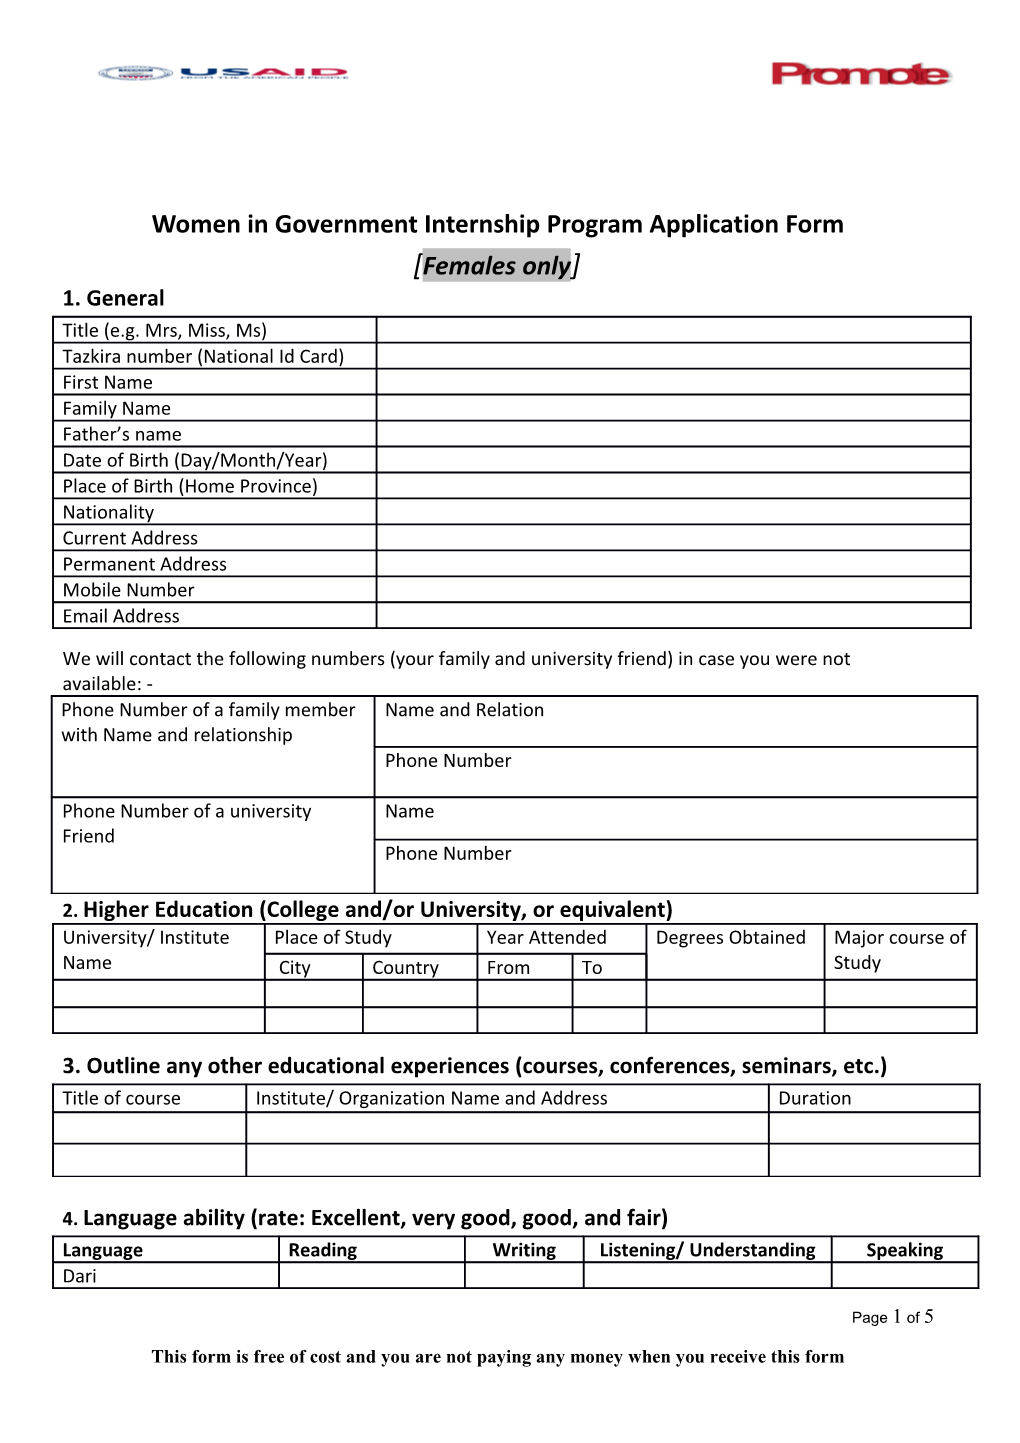 Women in Government Internship Program Application Form